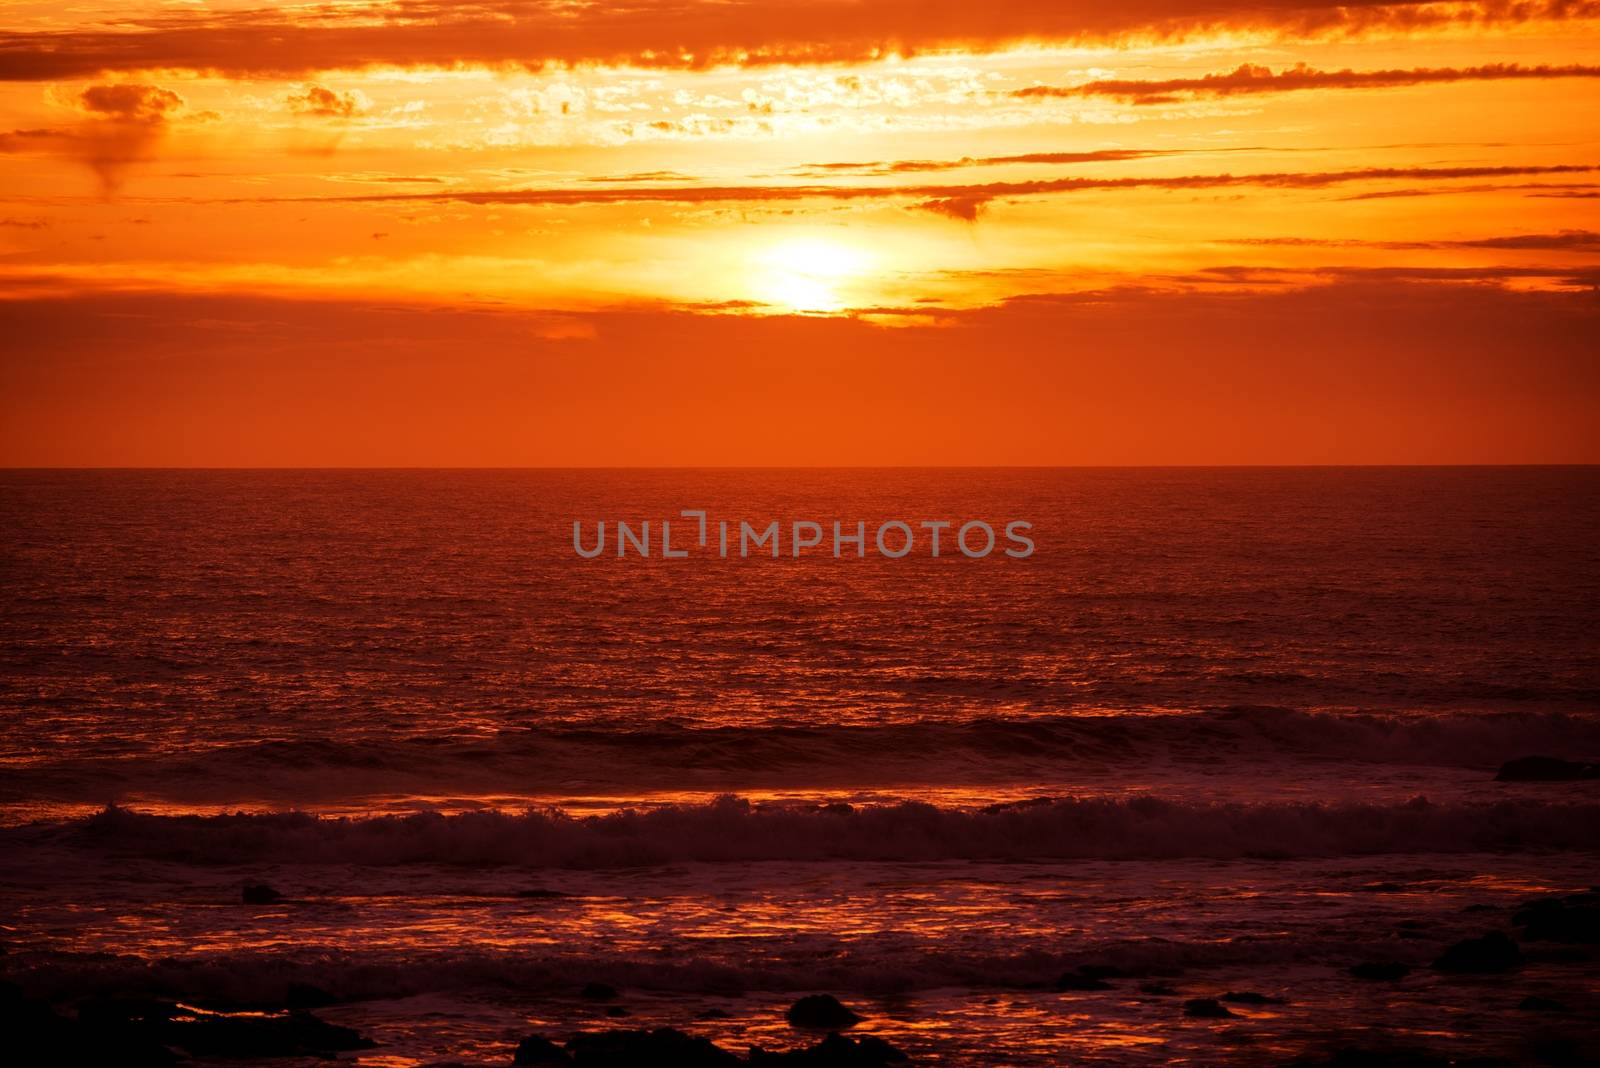 Scenic Red Ocean Sunset. Ocean Scenery.